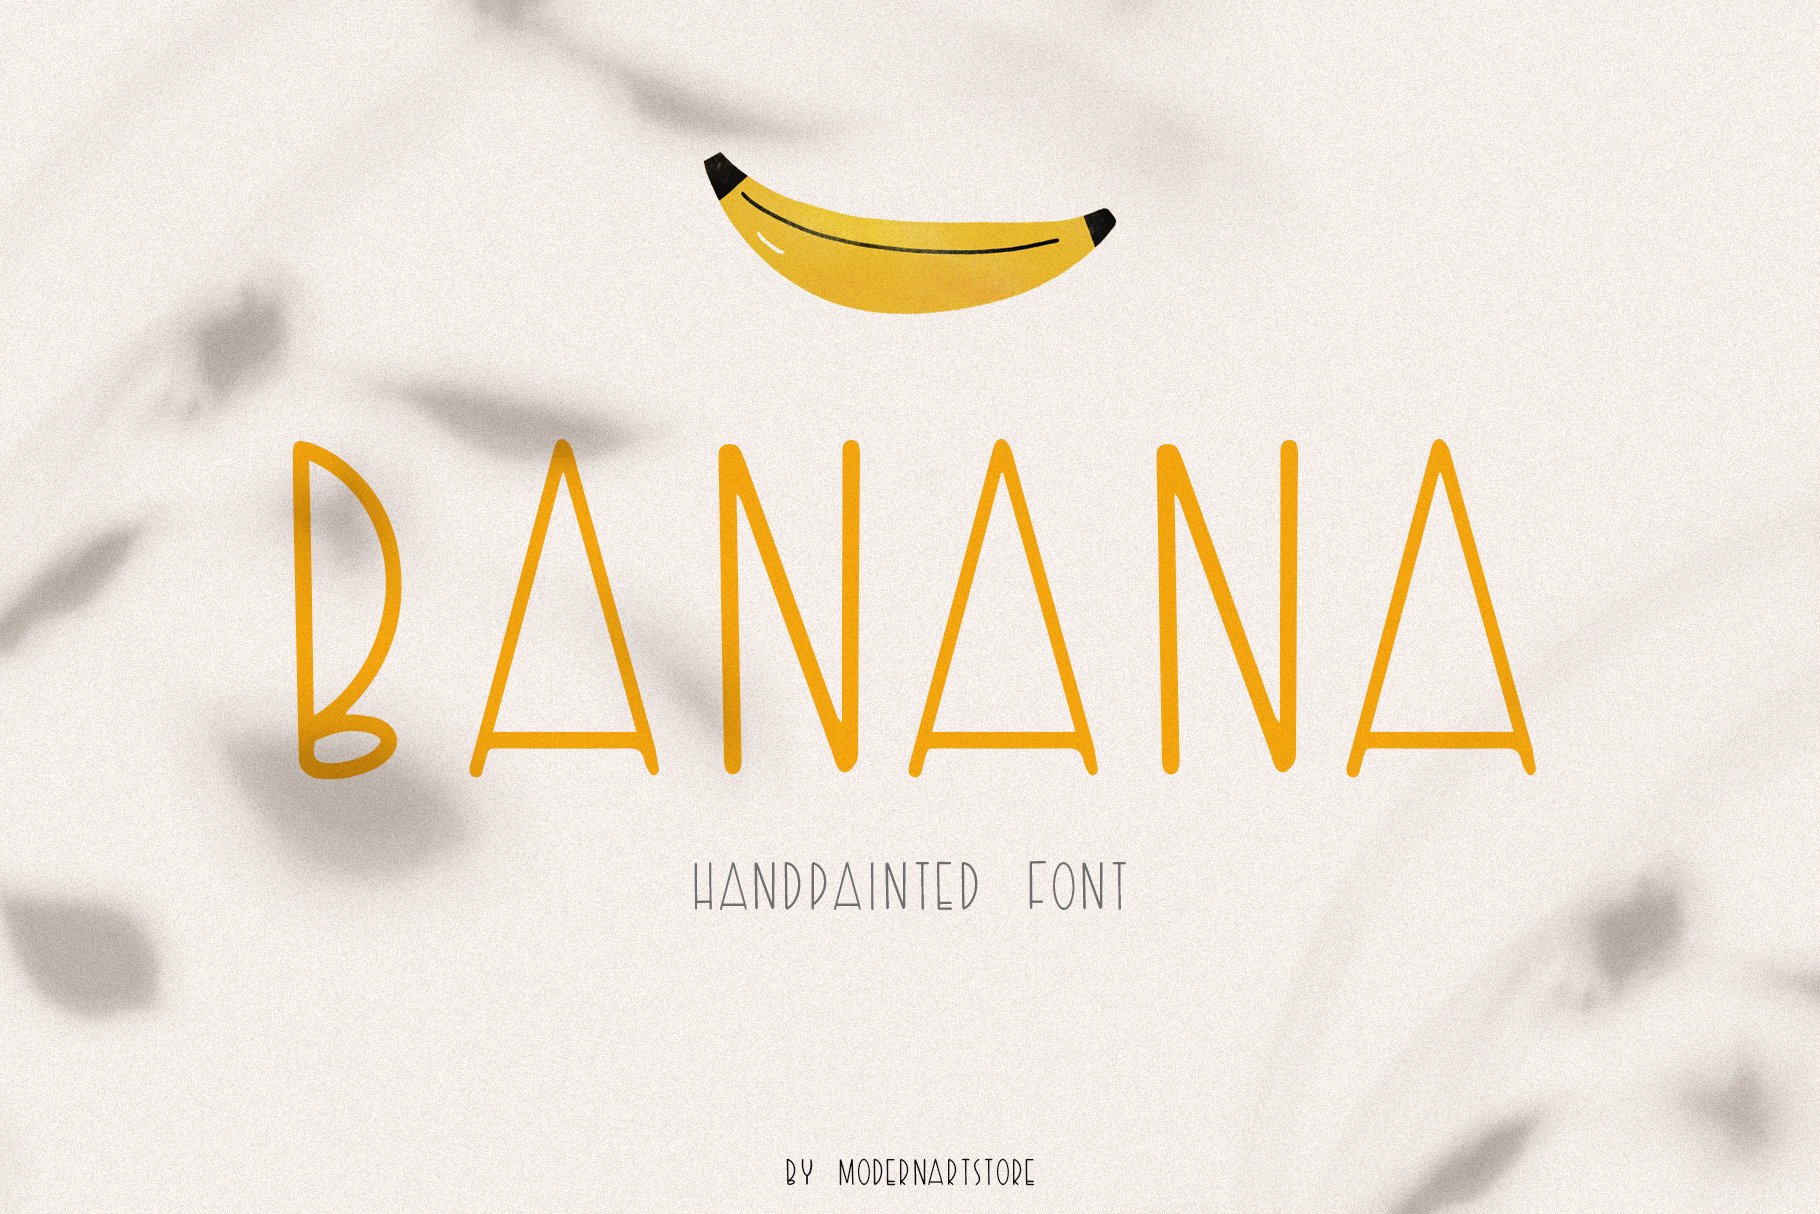 BANANA - Handwritten Font cover image.